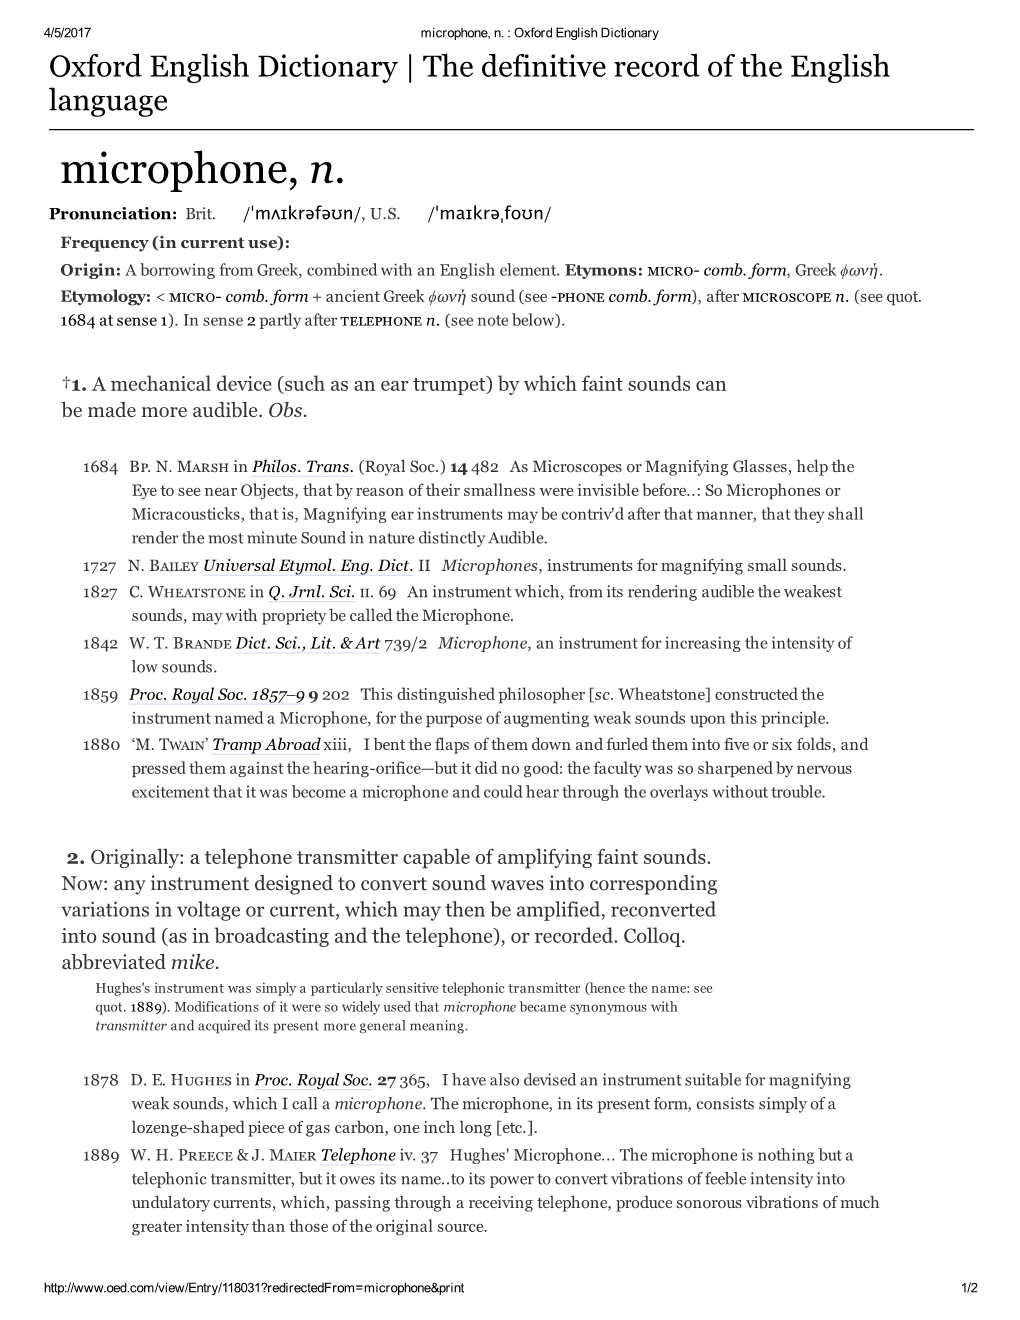 Microphone, N. : Oxford English Dictionary Oxford English Dictionary | the Definitive Record of the English Language Microphone, N